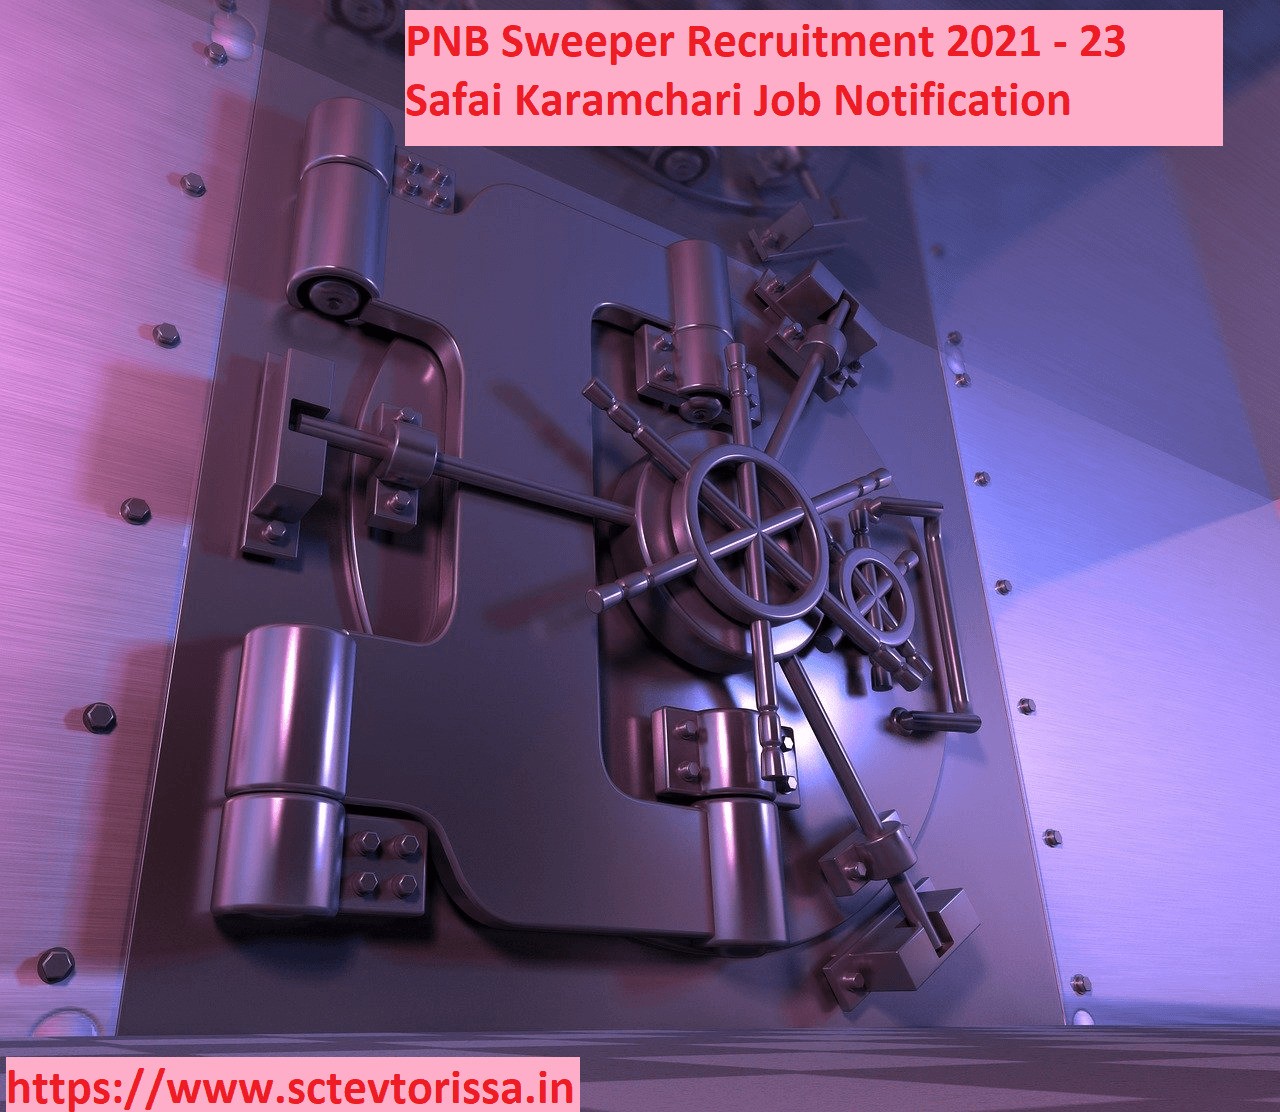 PNB Sweeper Recruitment